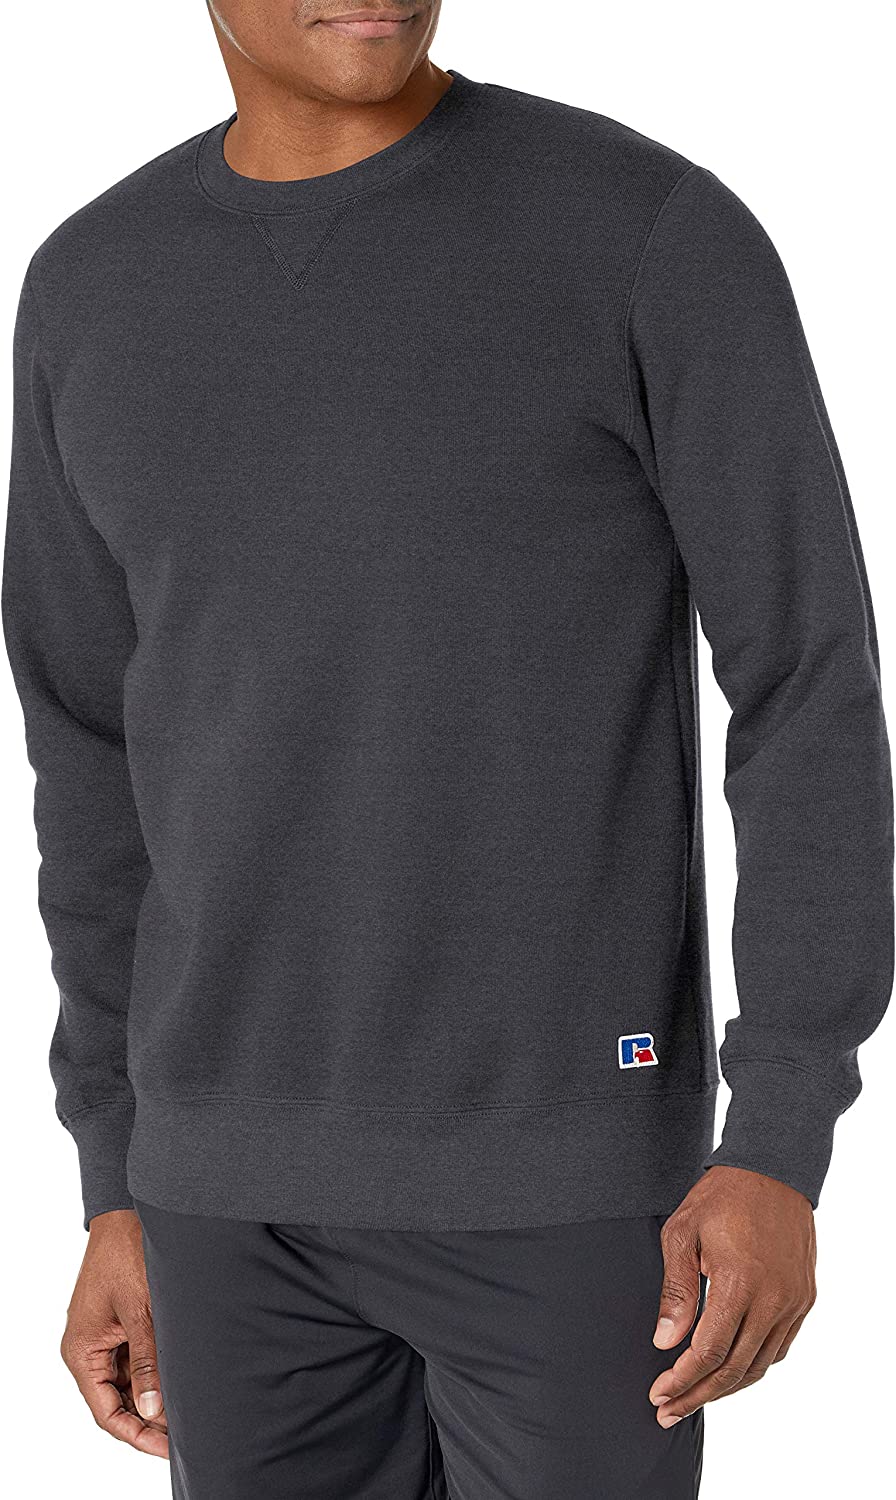 Russell Athletic Men's Cotton Rich 2.0 Premium Fleece Sweatshirt